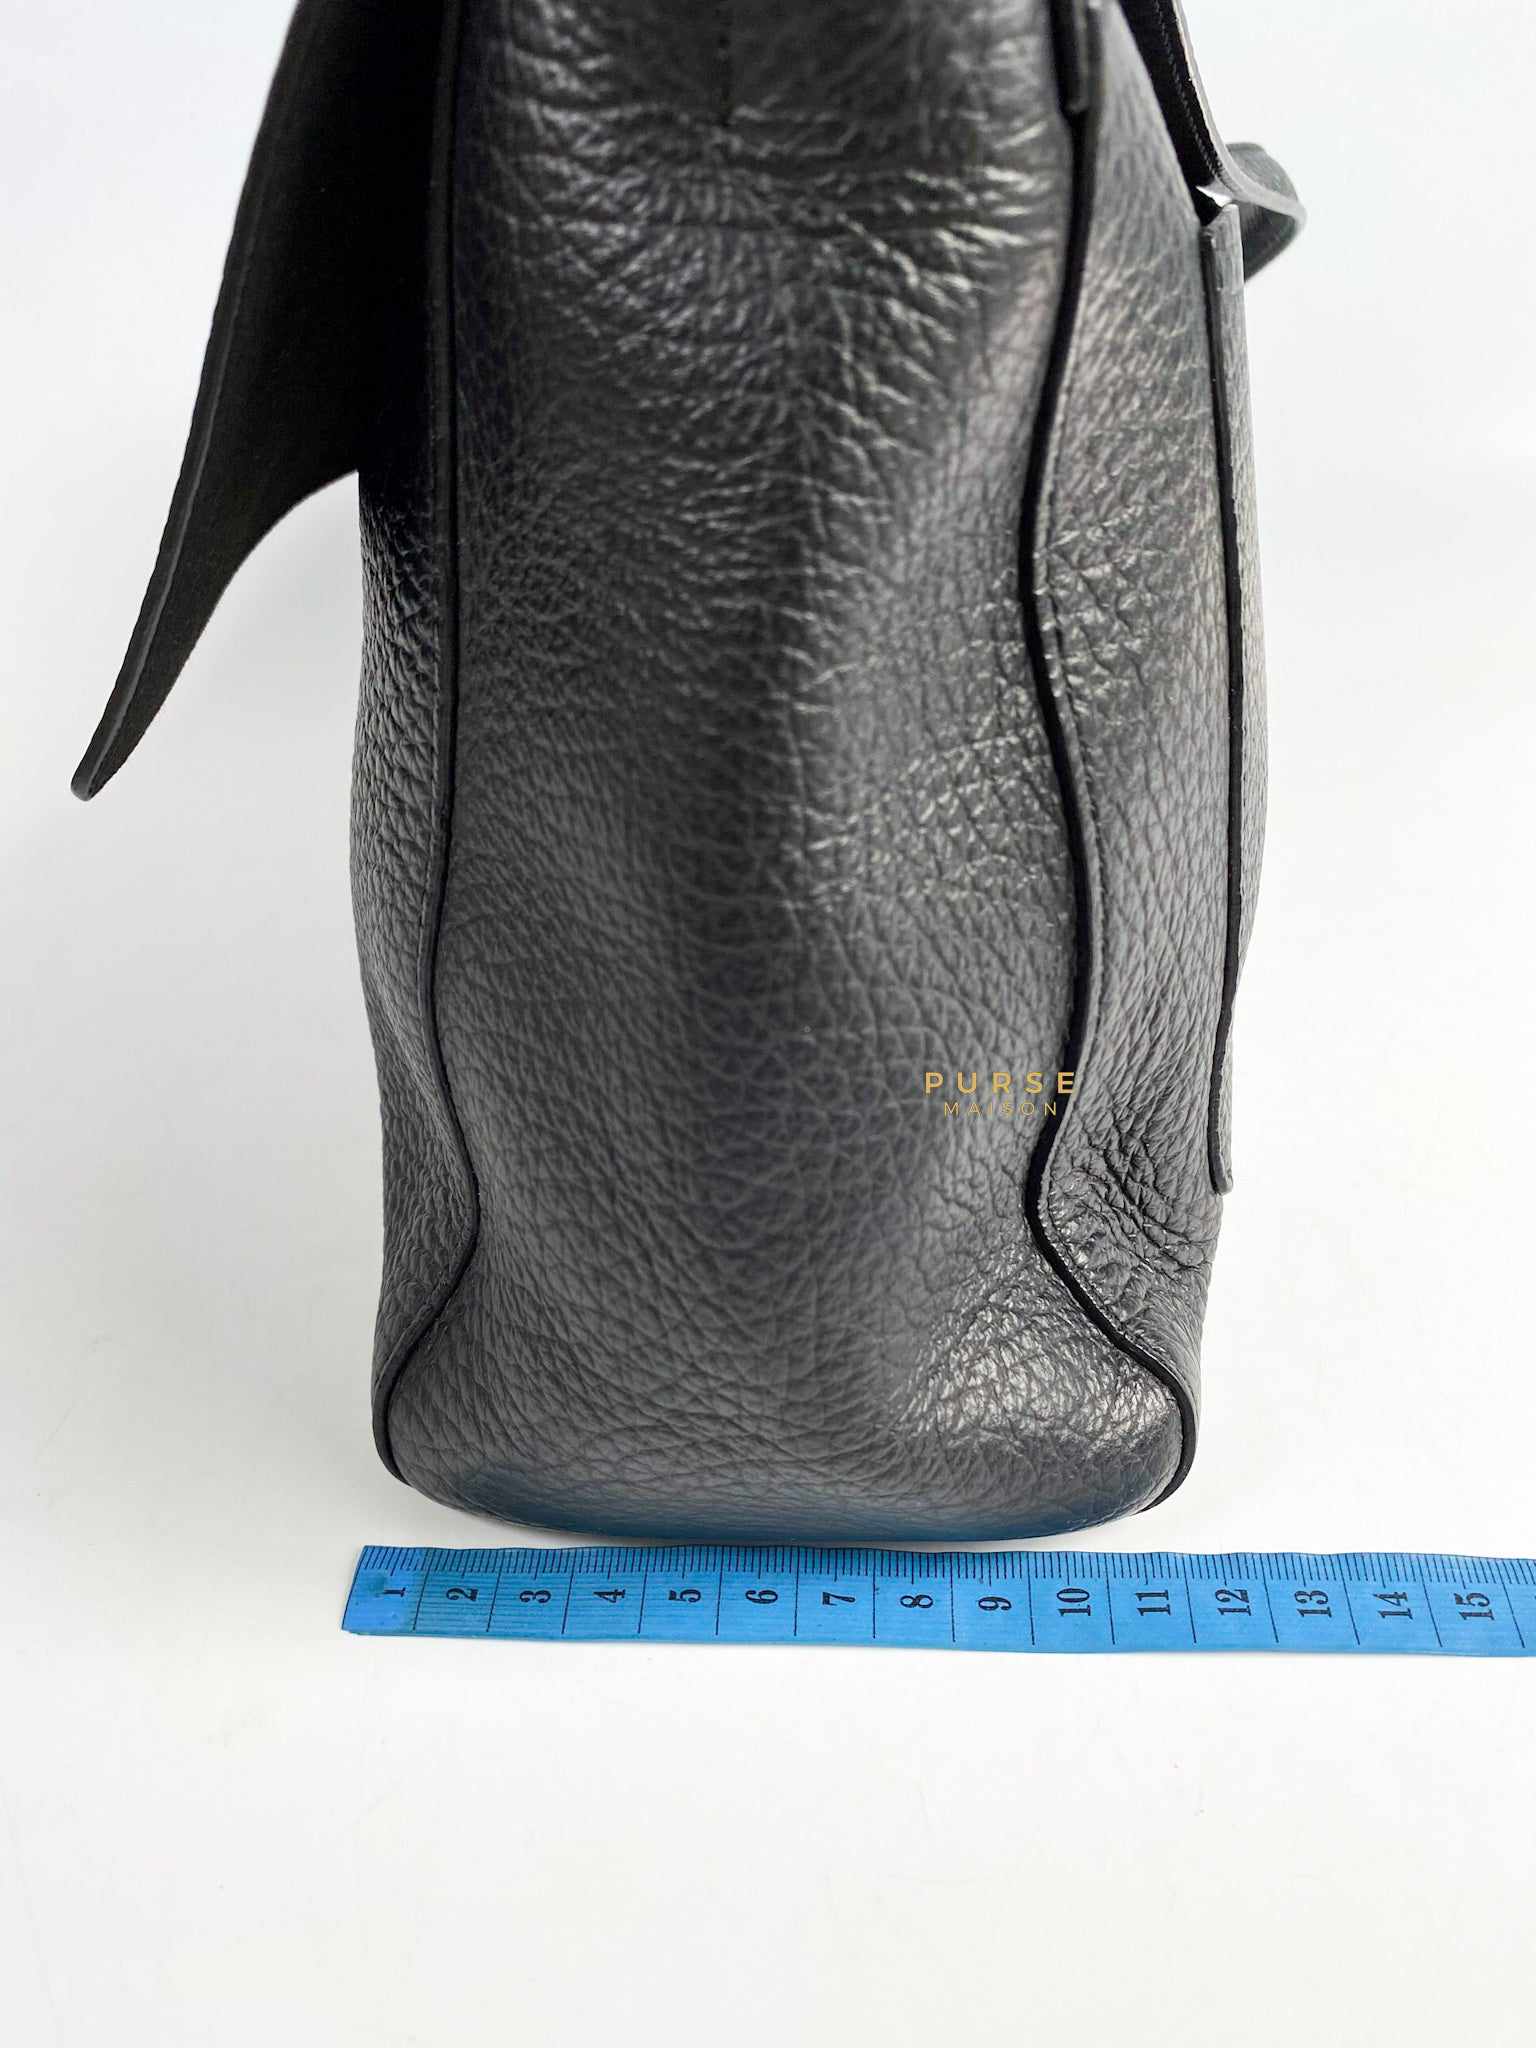 Furla Glenn Tote Bag Black Leather